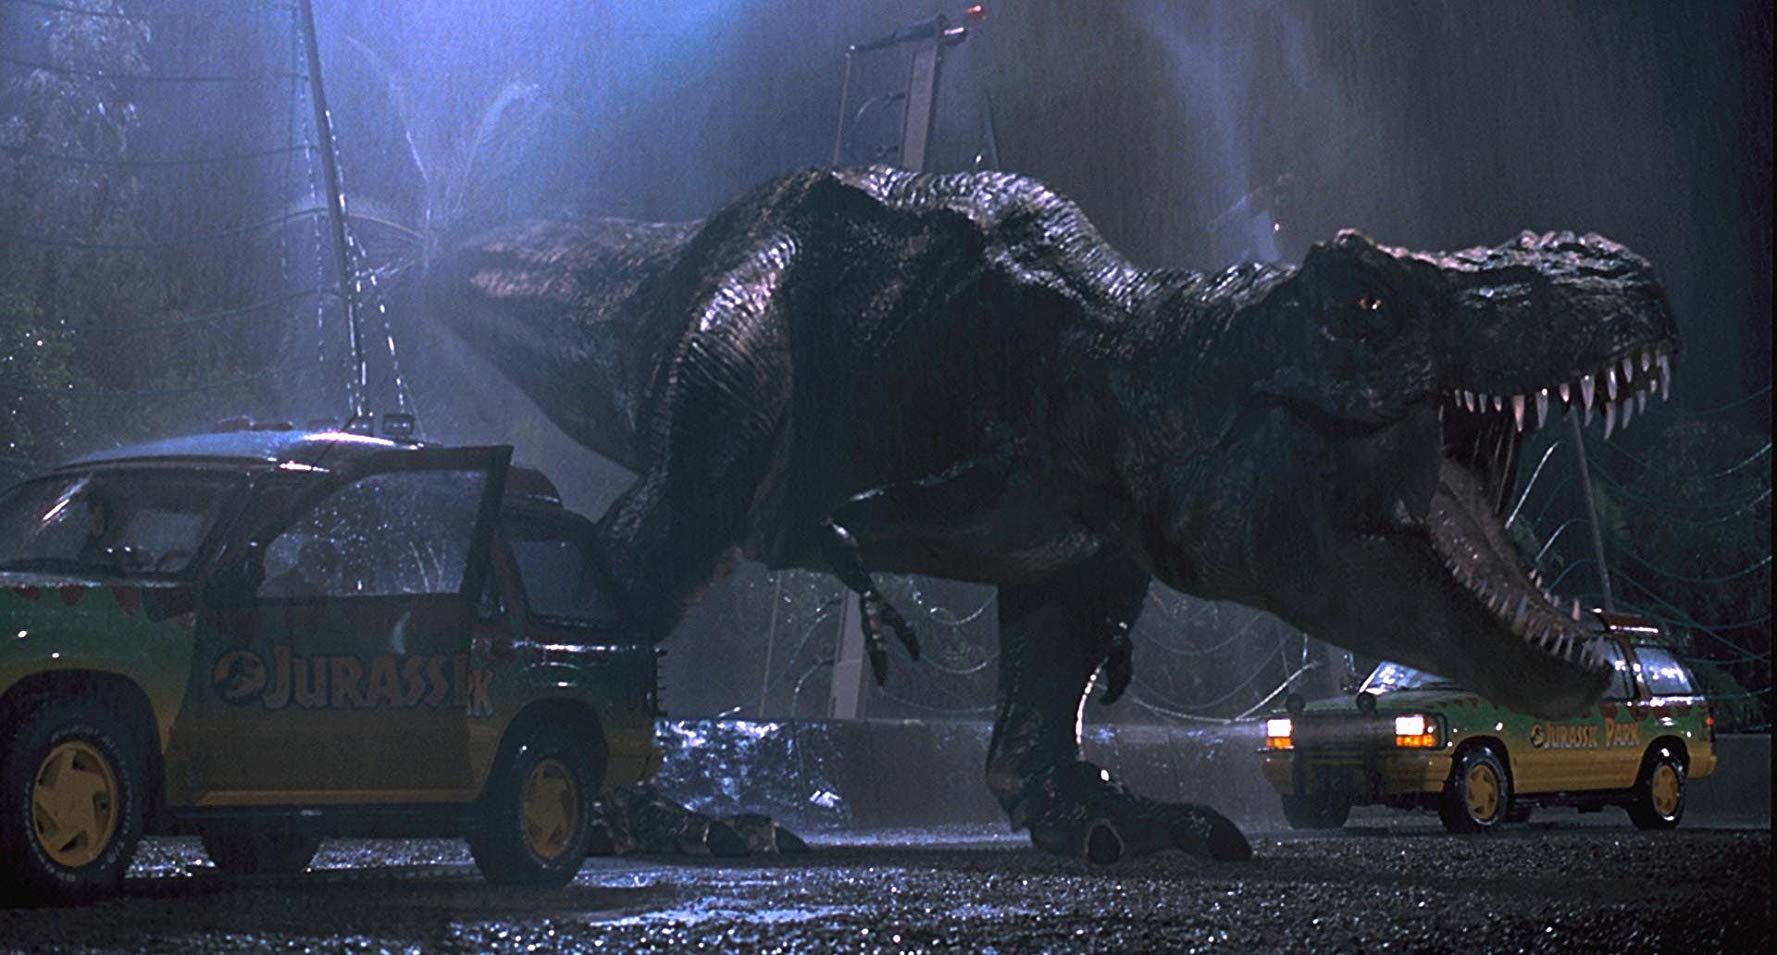 T-Rex Jurassic Park